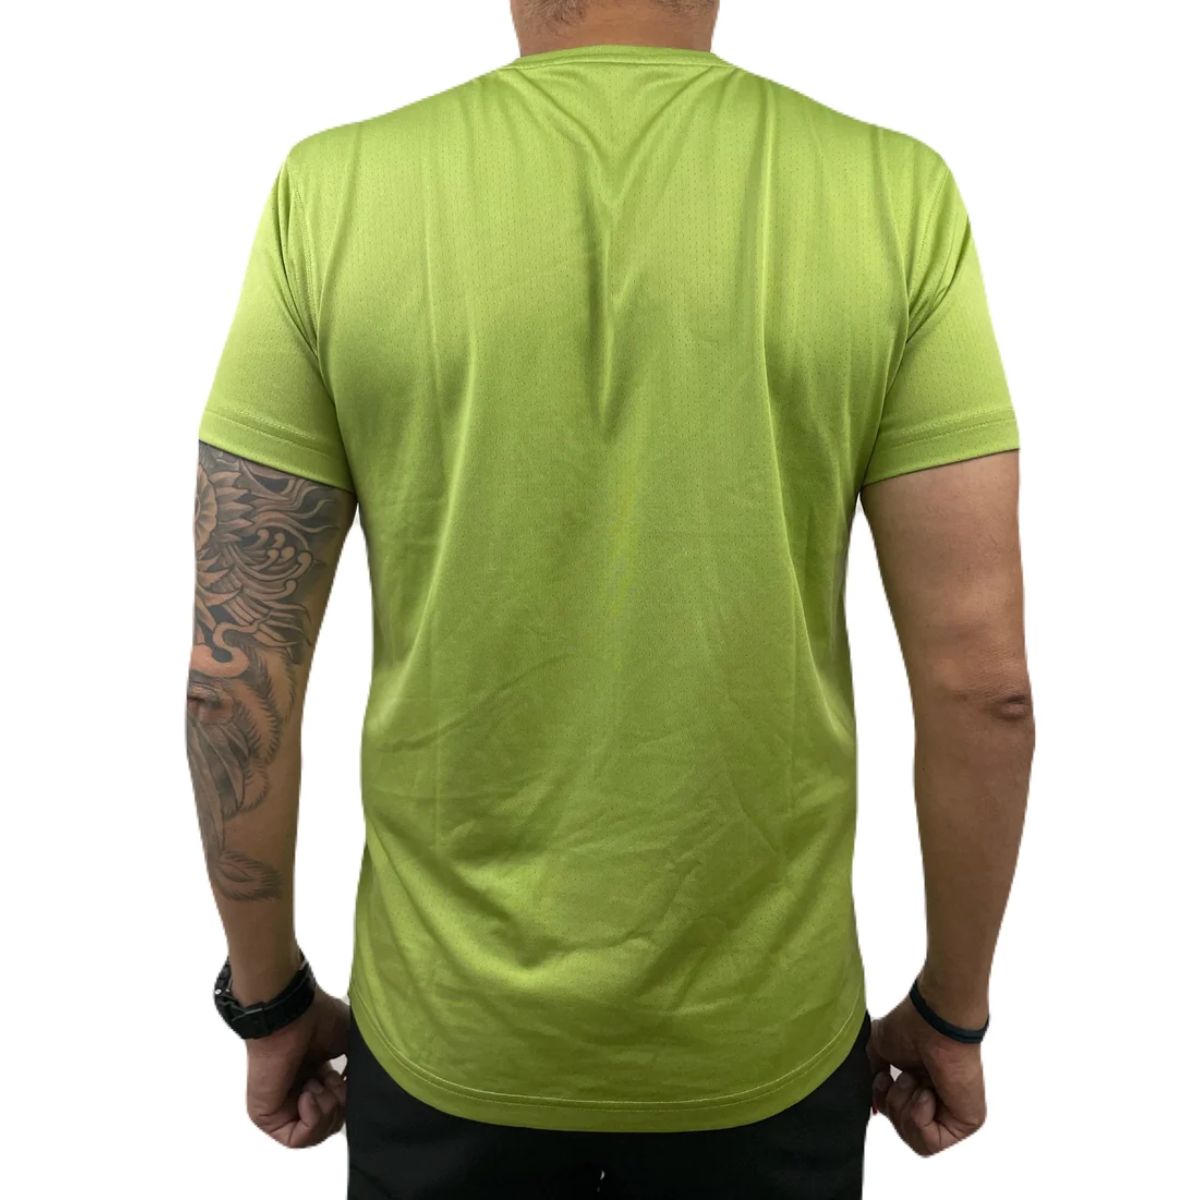 Kalimpong Activewear DryFit T-shirt - Half Sleeves - Green 2